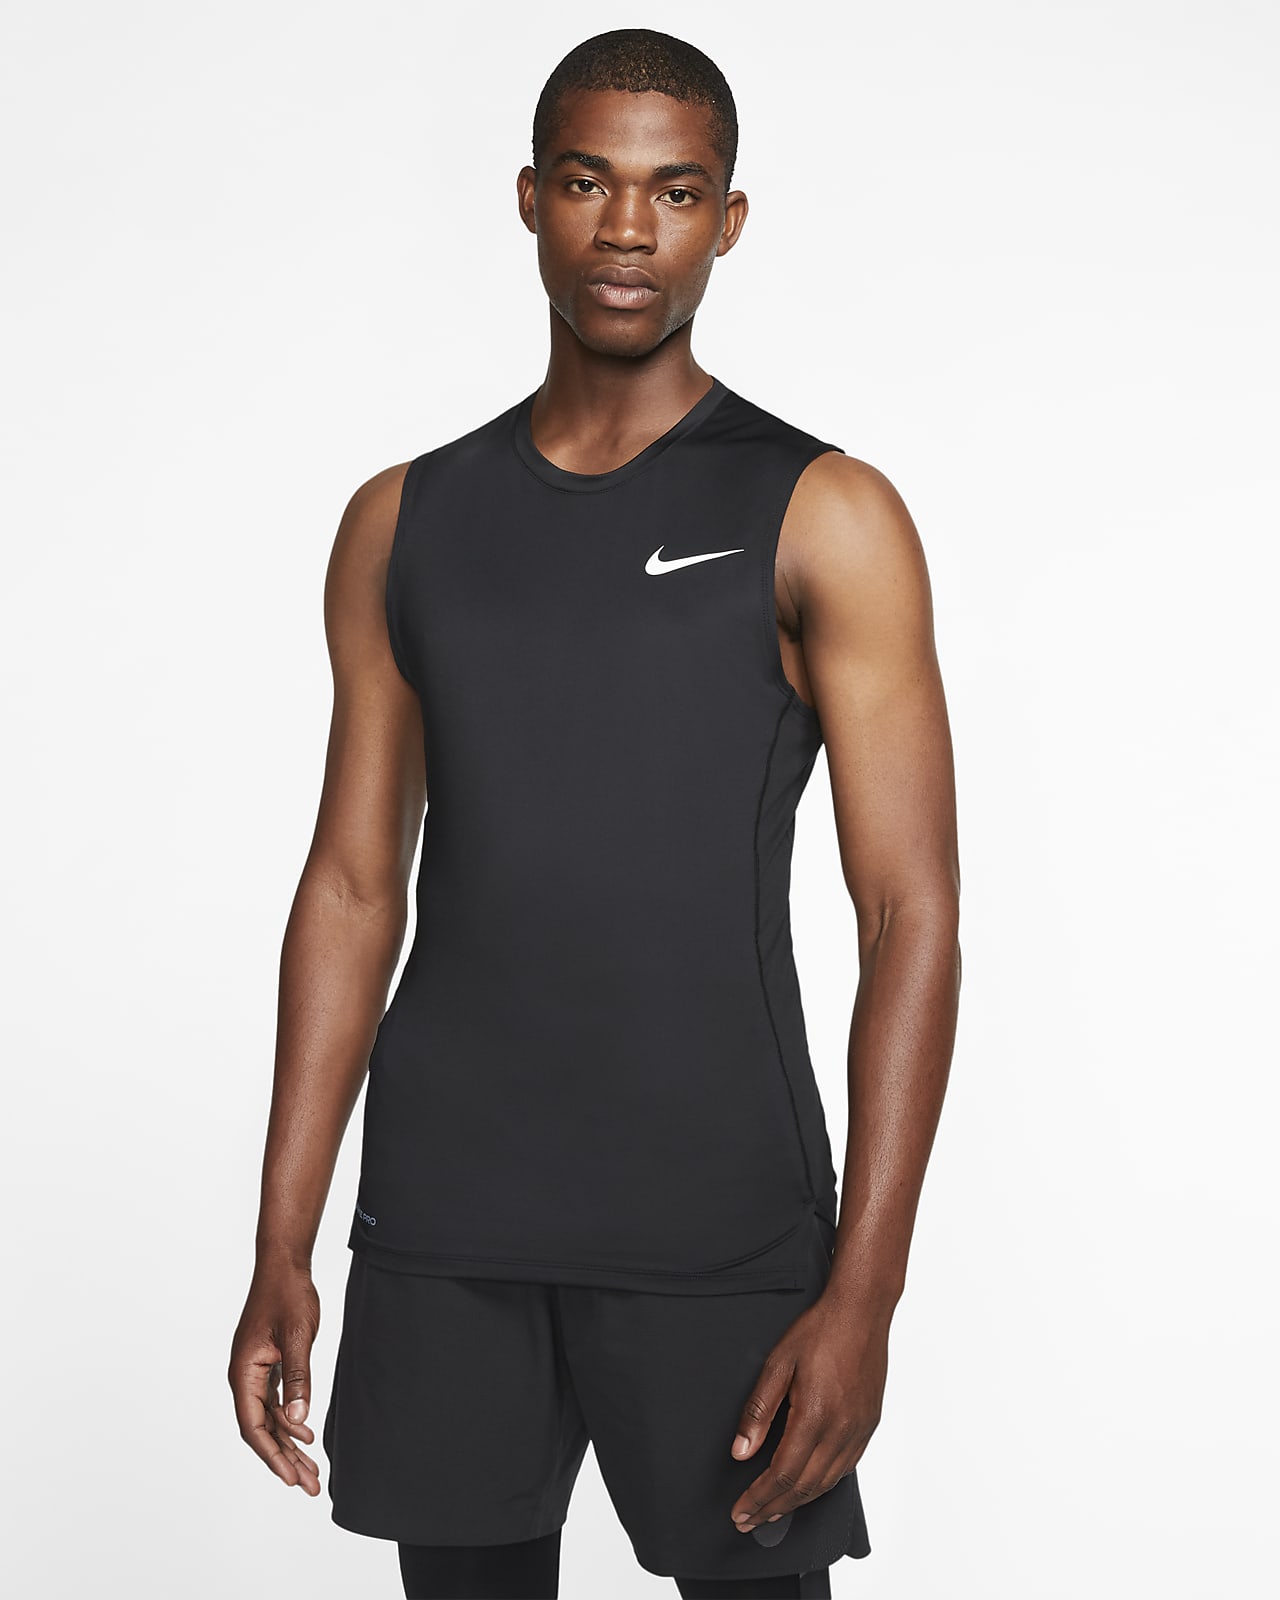 Nike Pro Men's Sleeveless Top. Nike LU